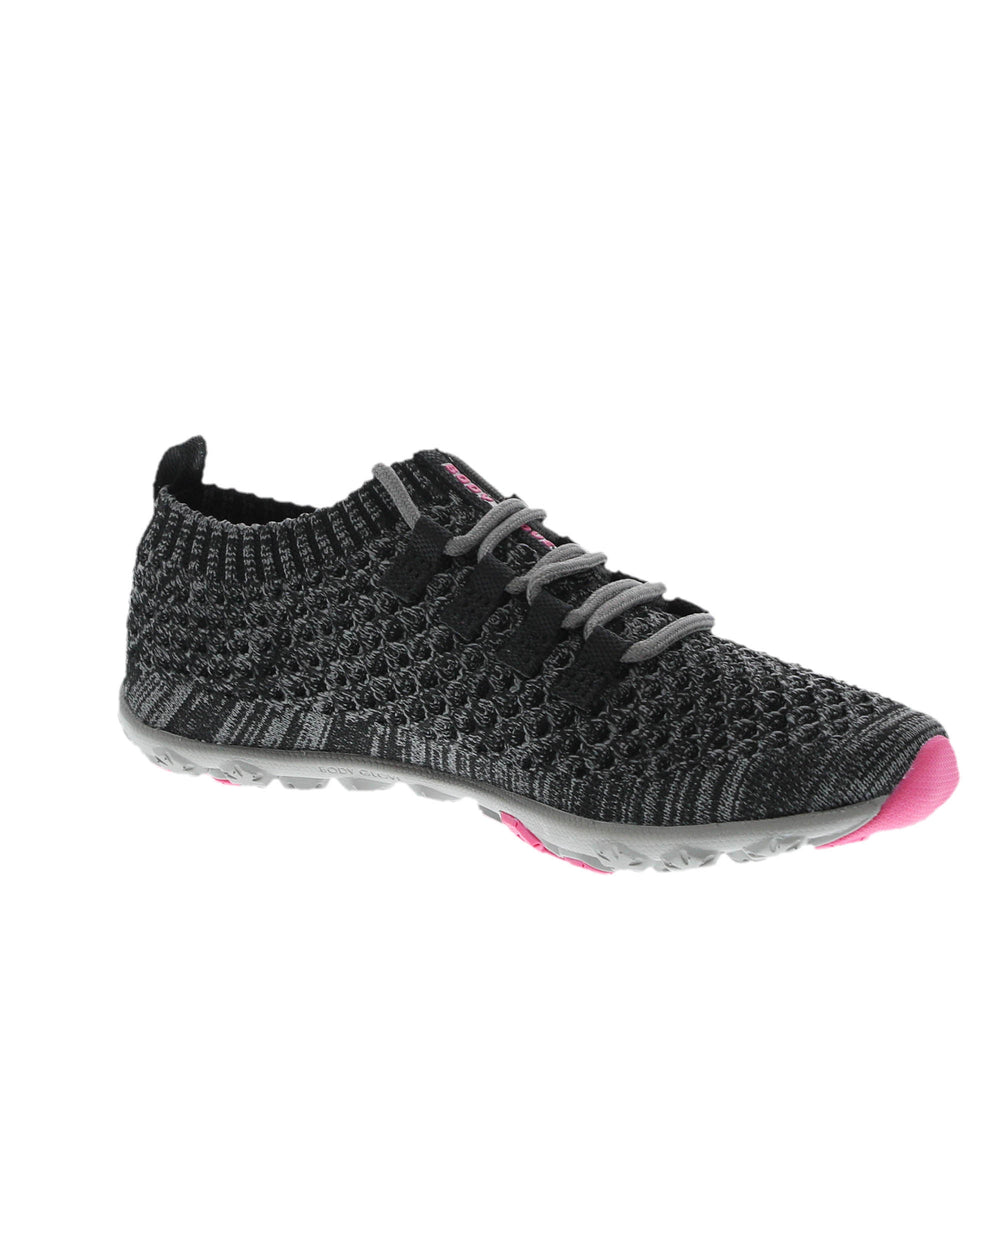 Women's Tracker Water Shoes - Black/Pink